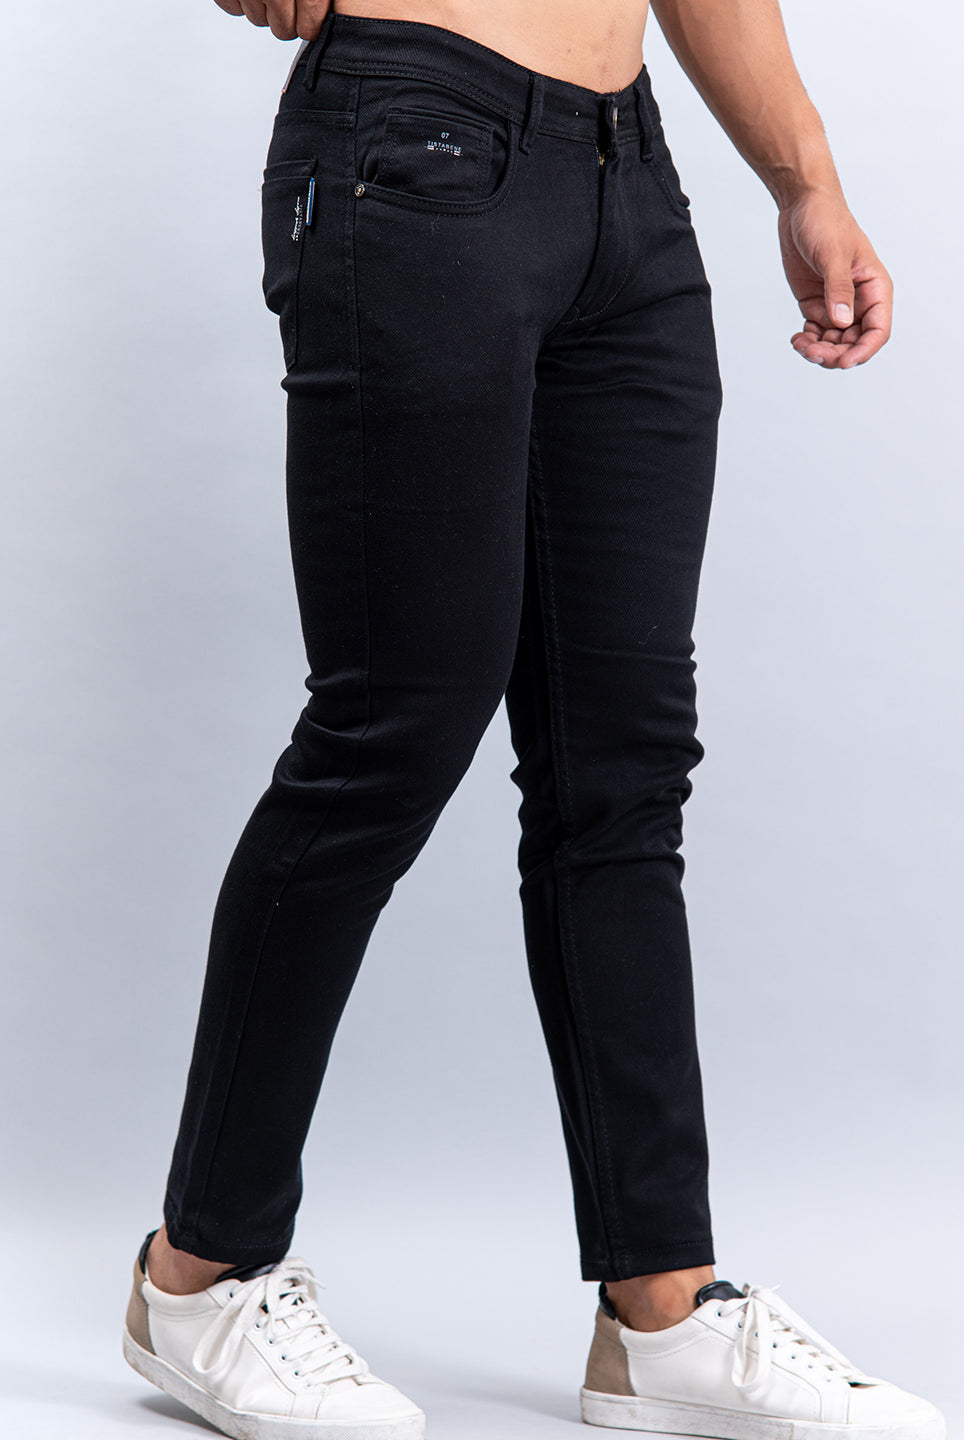 black denim jeans 